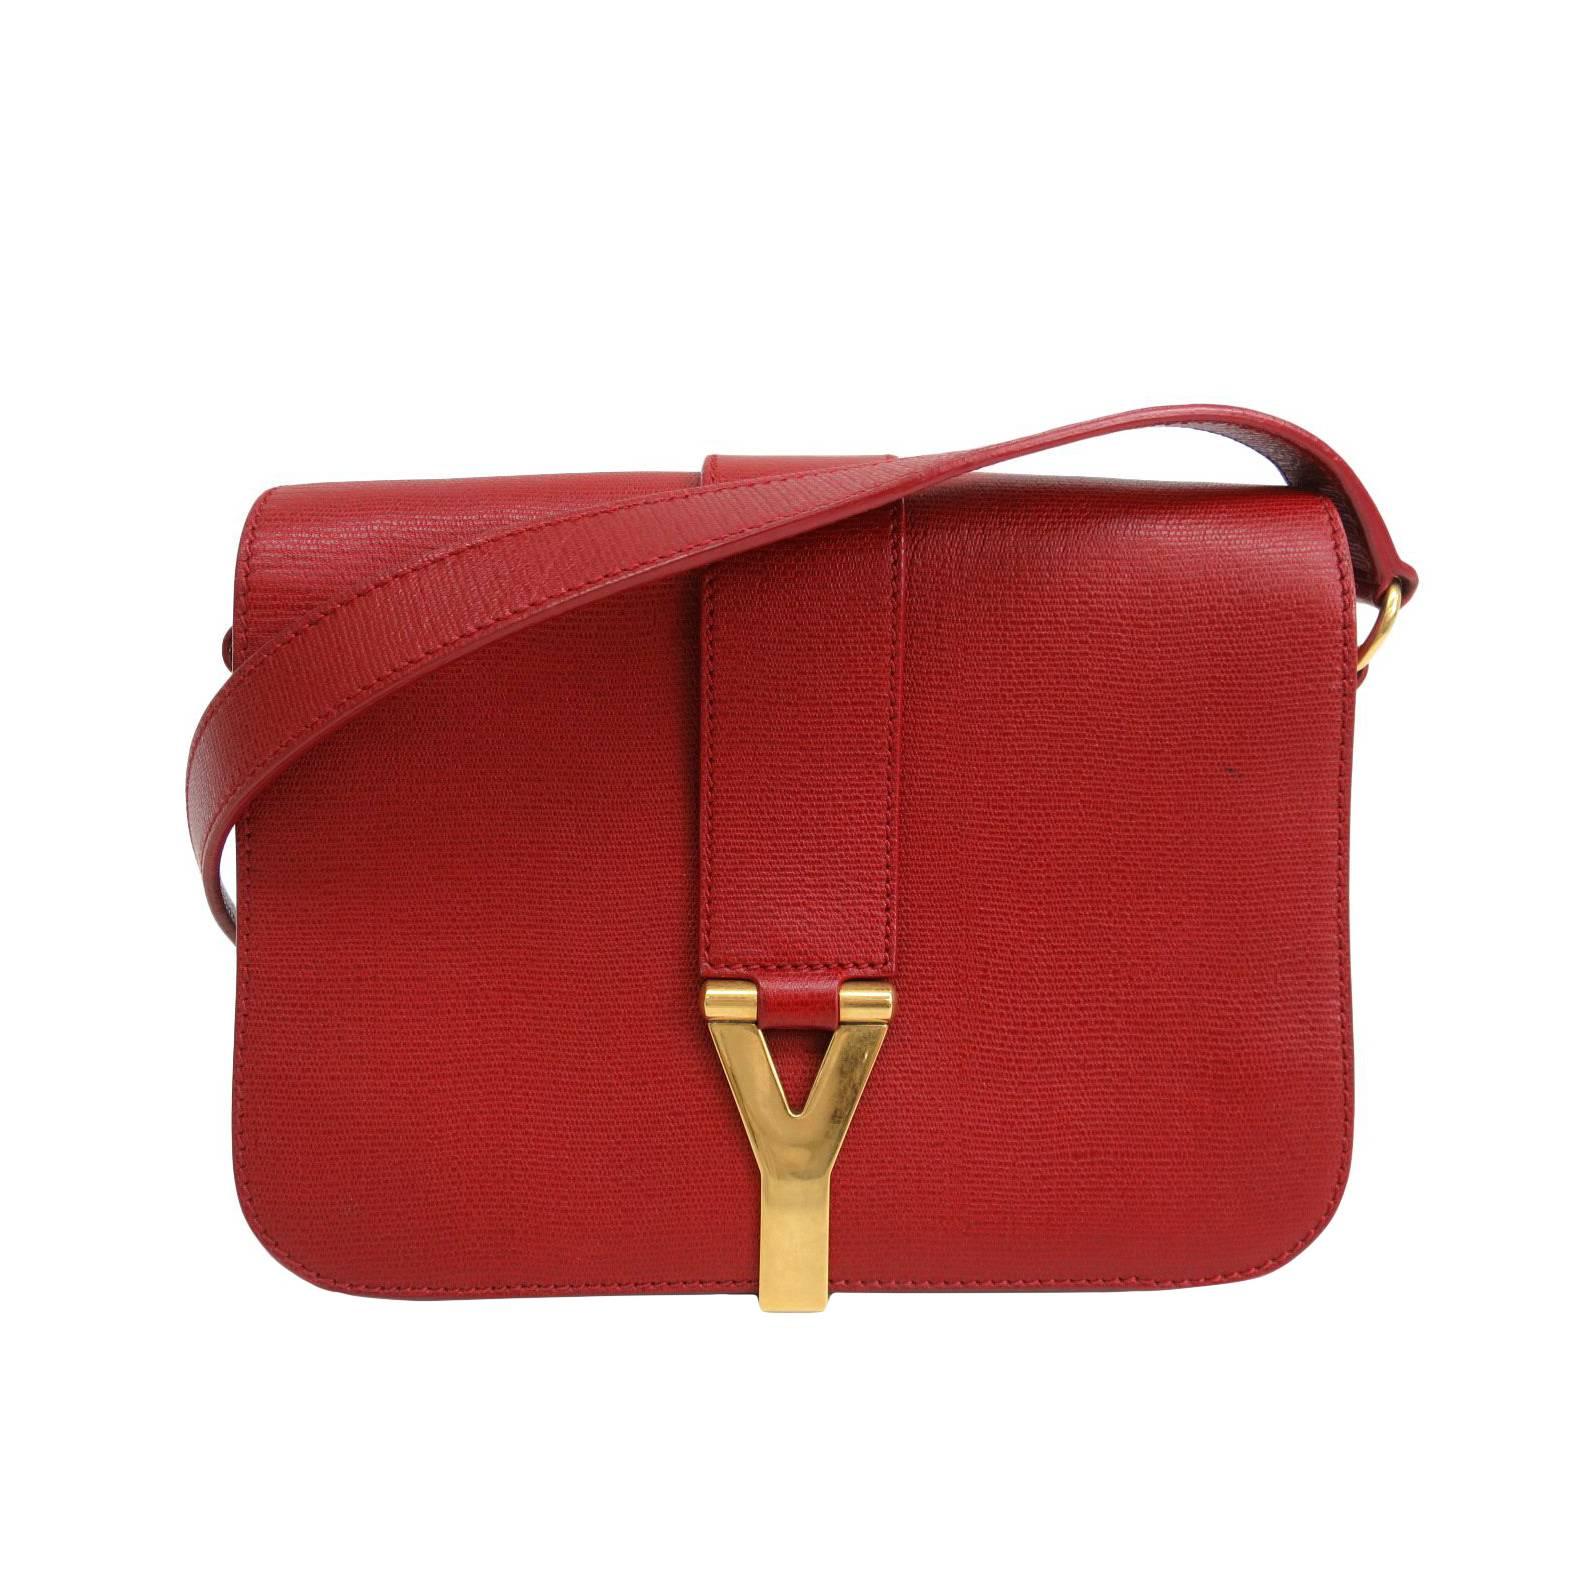 Yves Saint Laurent (YSL) Chyc Y Red Leather Gold Hardware Crossbody Shoulder Bag